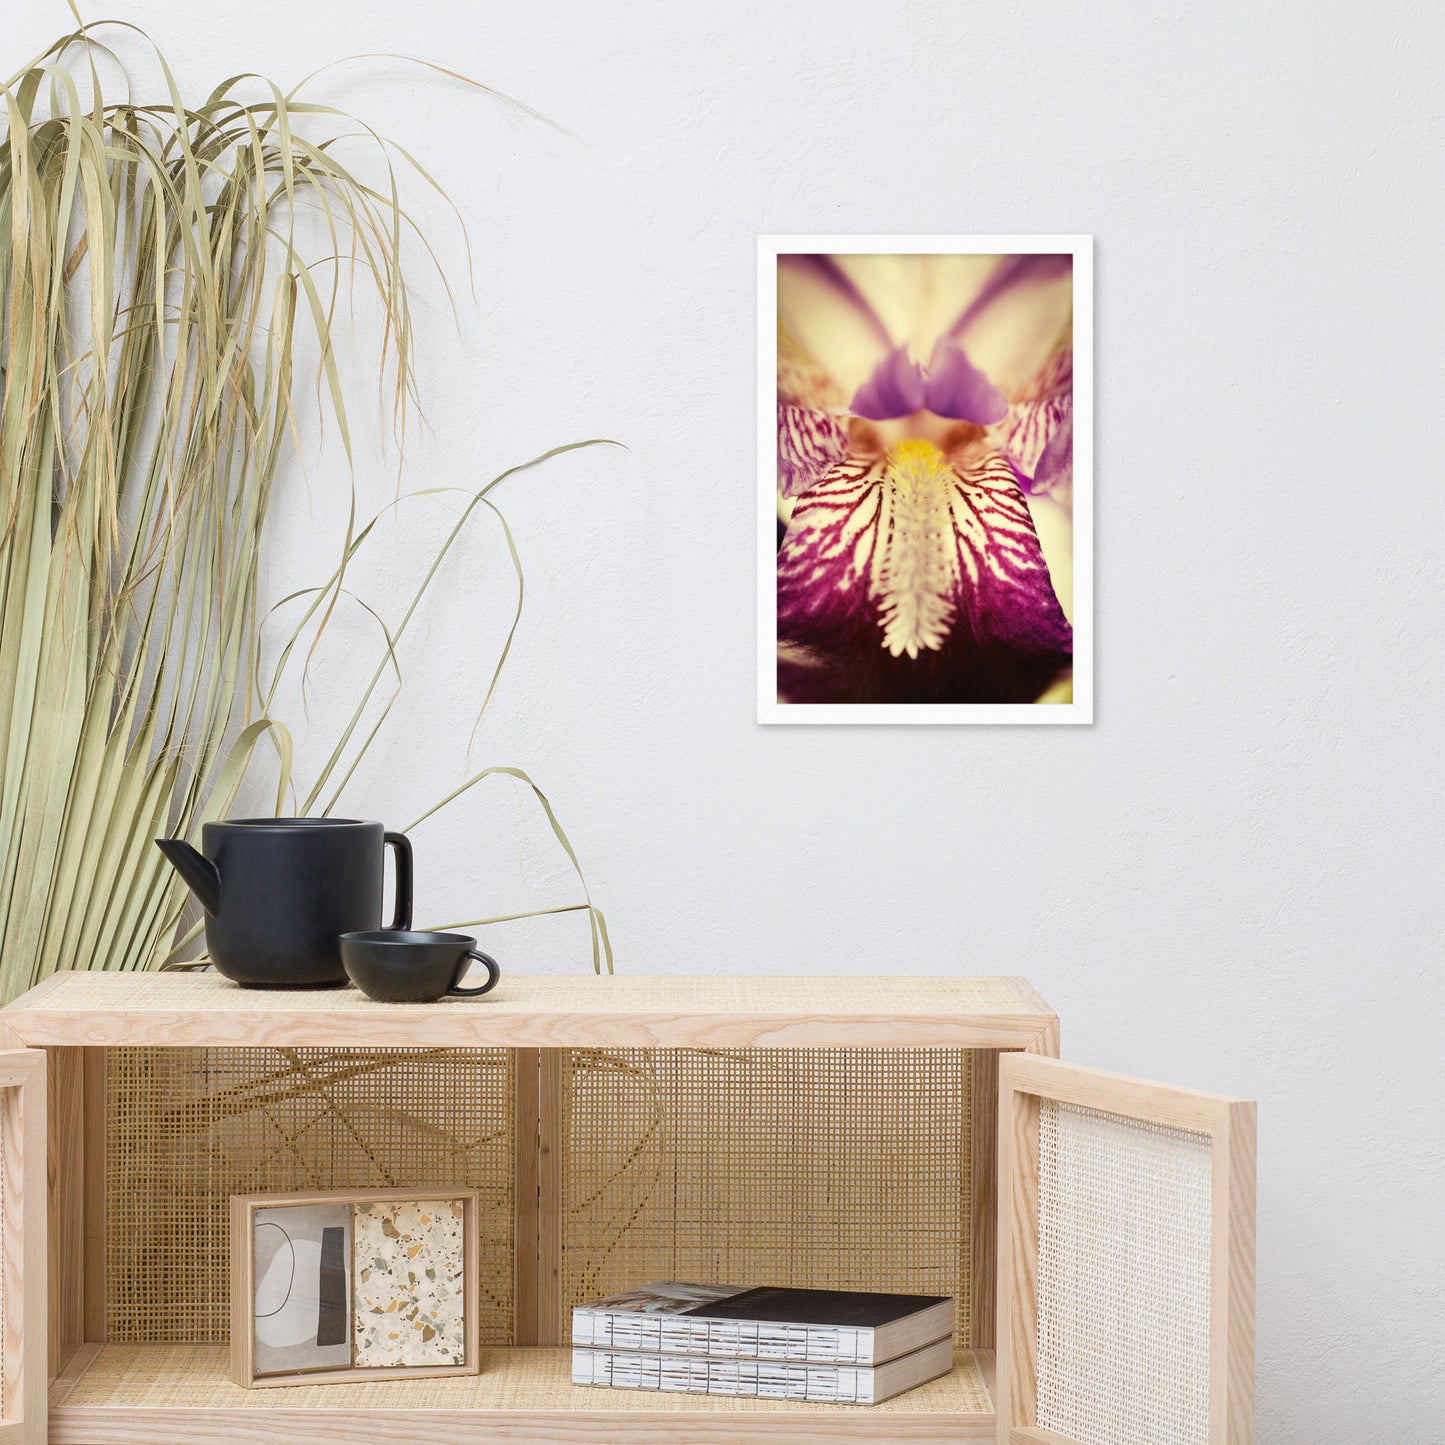 Flower Picture Prints: Antiqued Iris Floral / Flora / Botanical / Nature Photo Framed Wall Art Print - Artwork - Modern Wall Decor